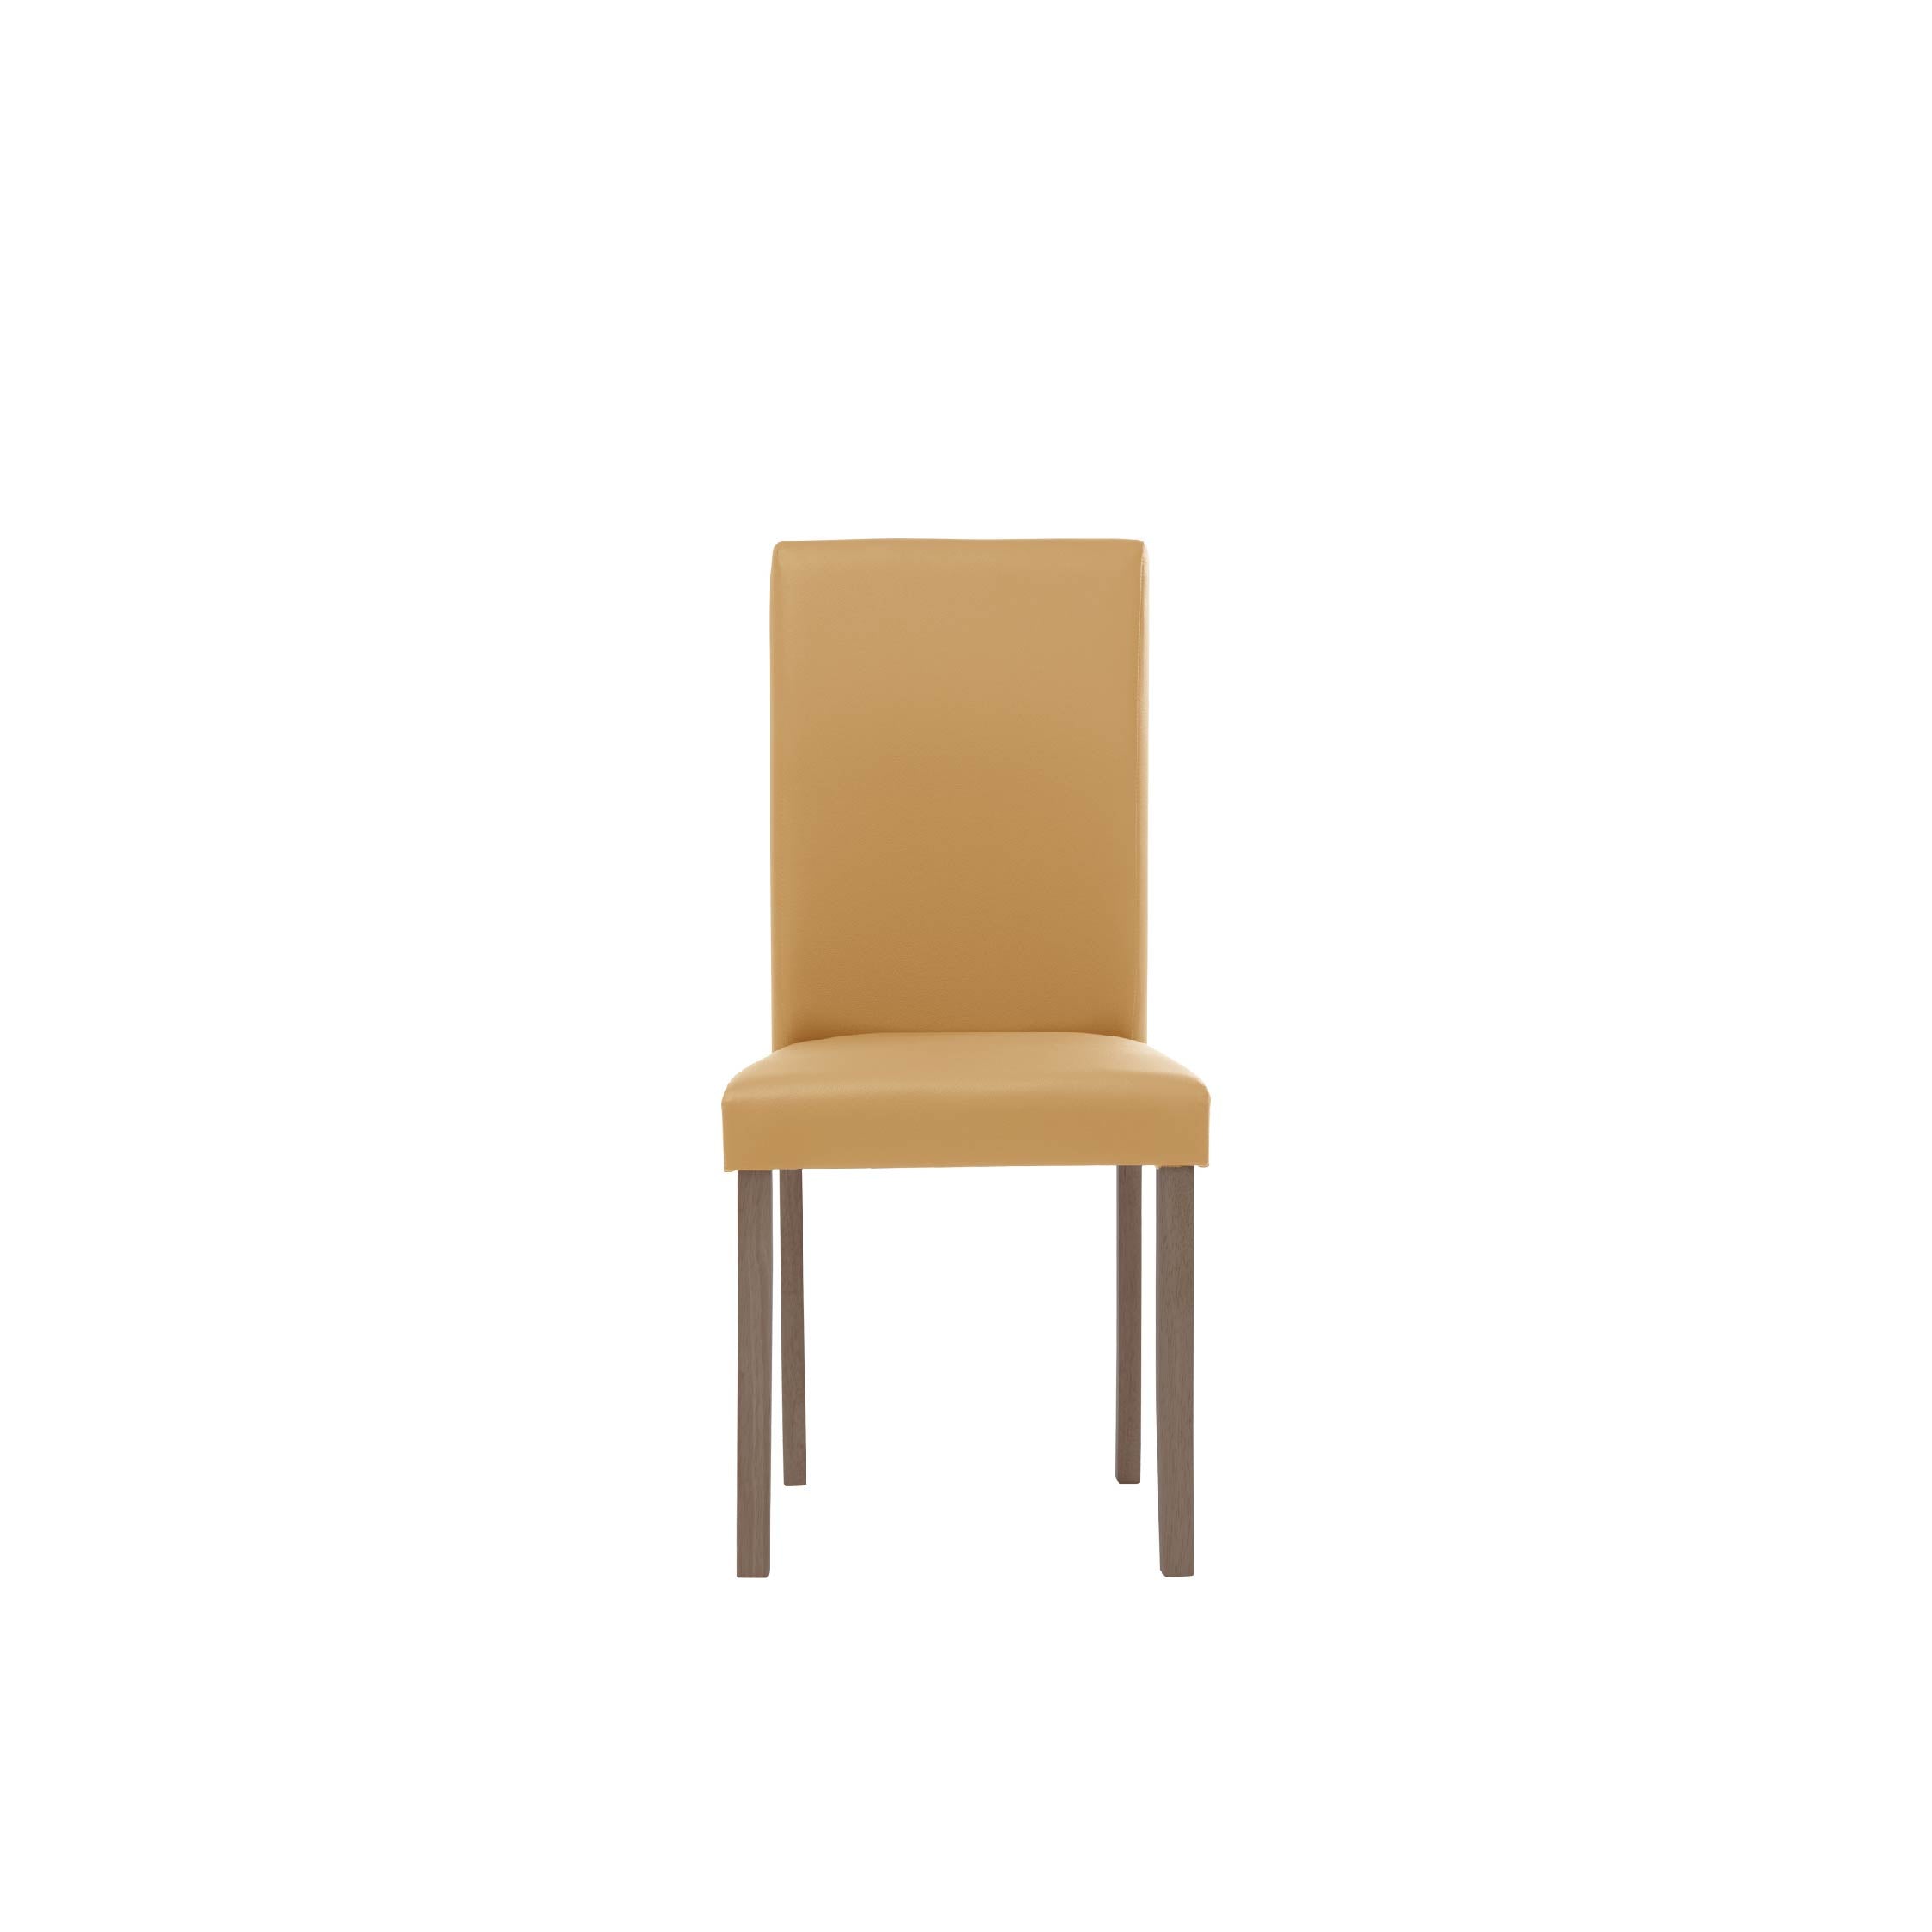 BASIC Dining Chair (2 pcs.)